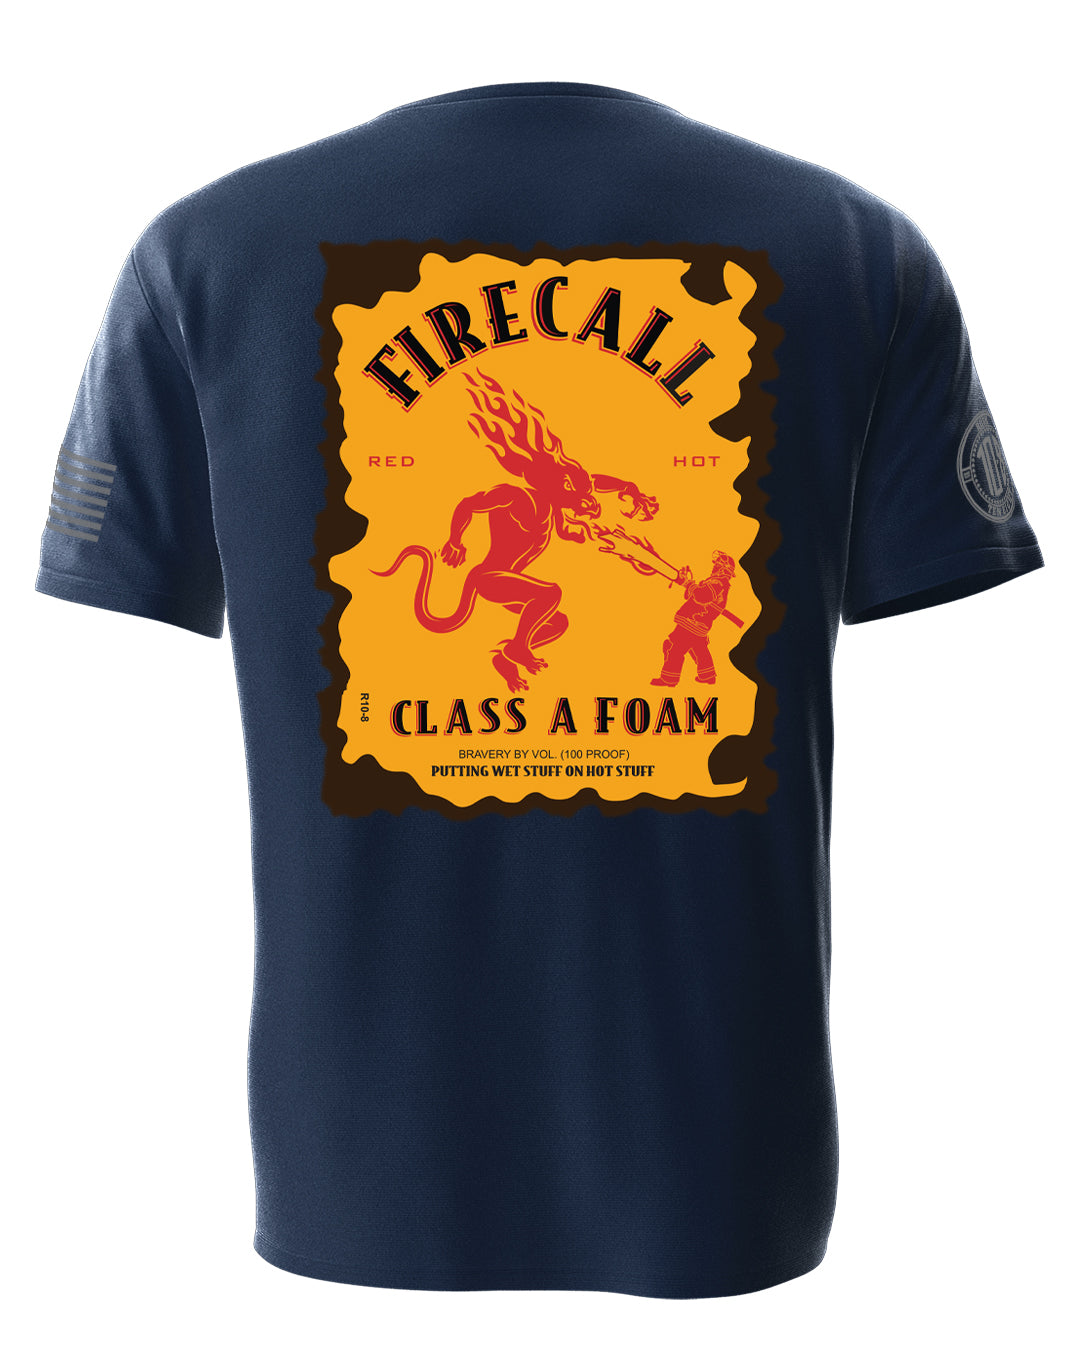 Firecall Men's Tee